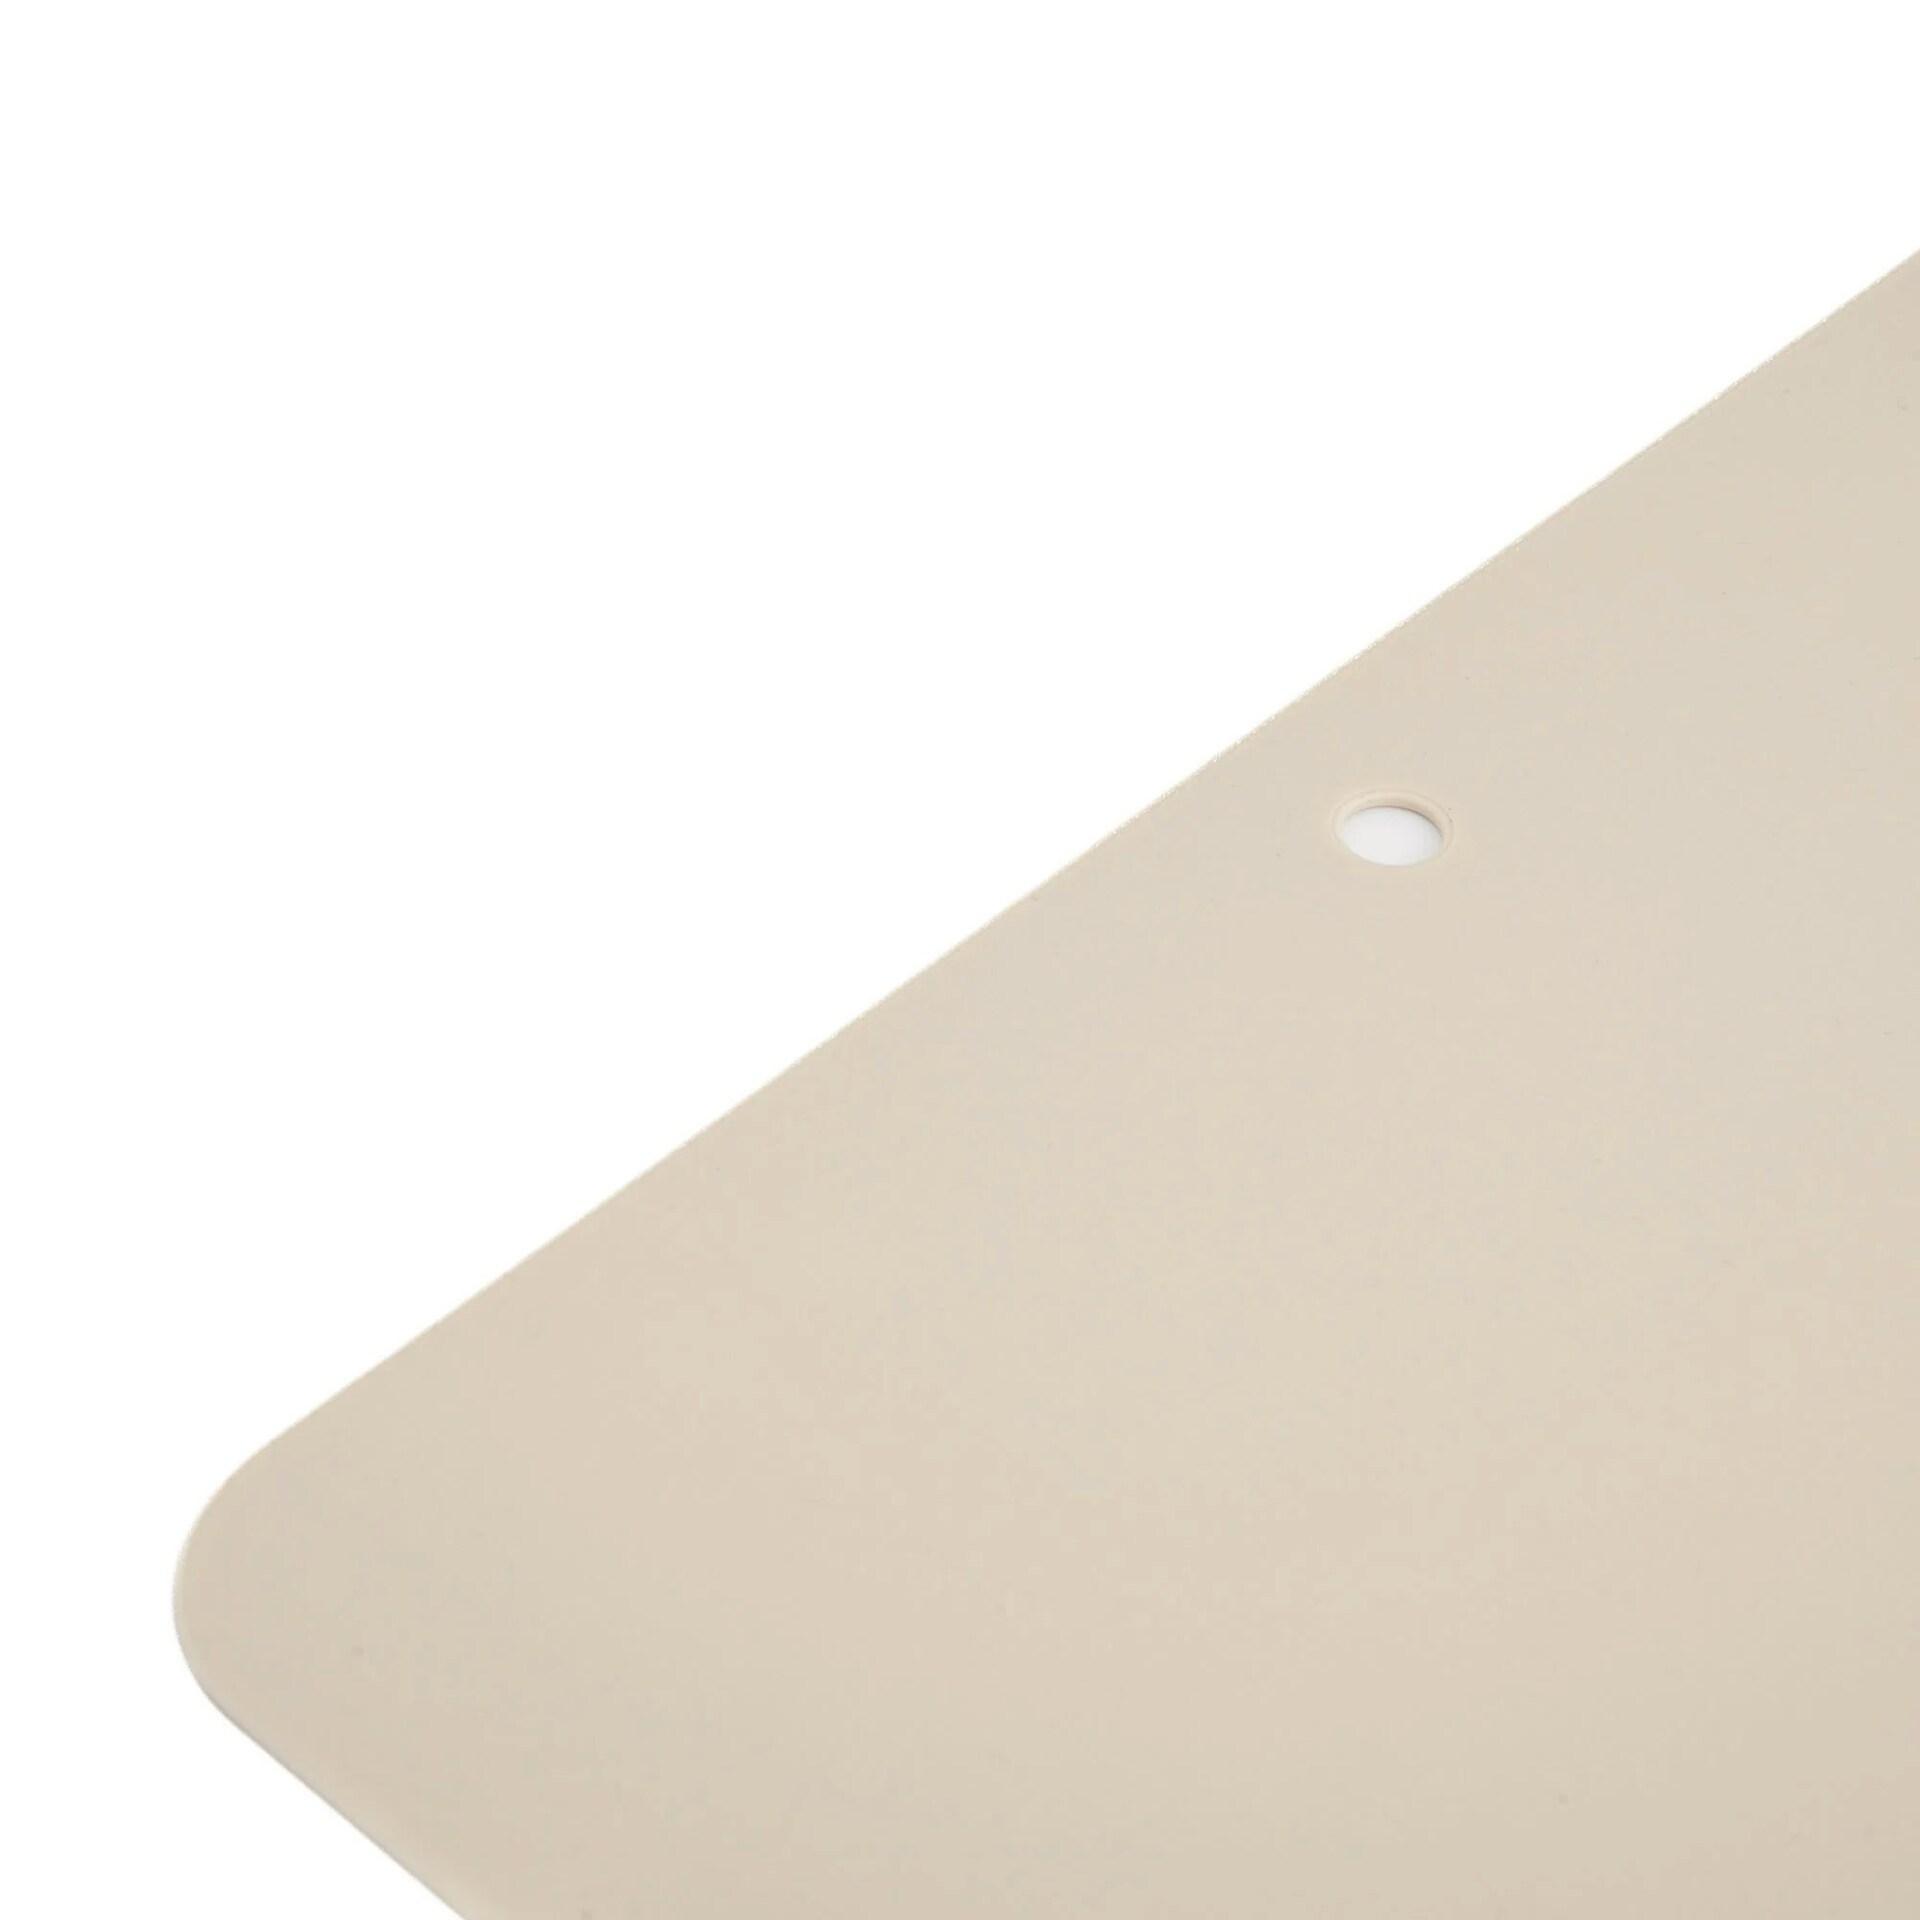 https://royaldesign.com/image/2/mareld-mareld-2-pack-flexible-cutting-board-bioplastic-beige-3